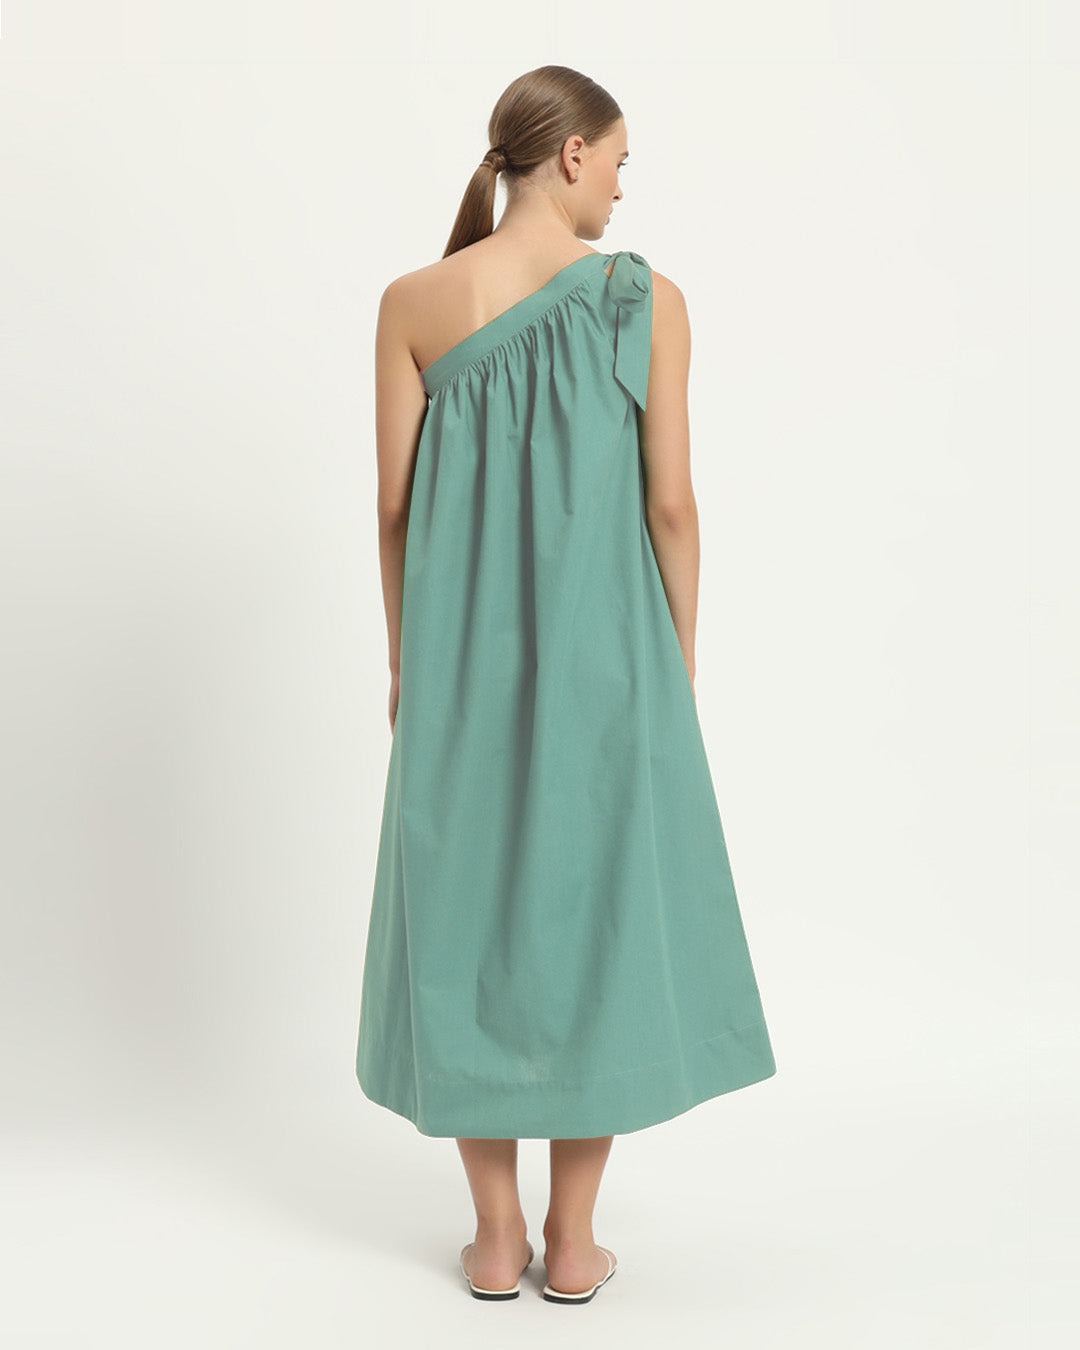 The Strehla Mint Cotton Dress